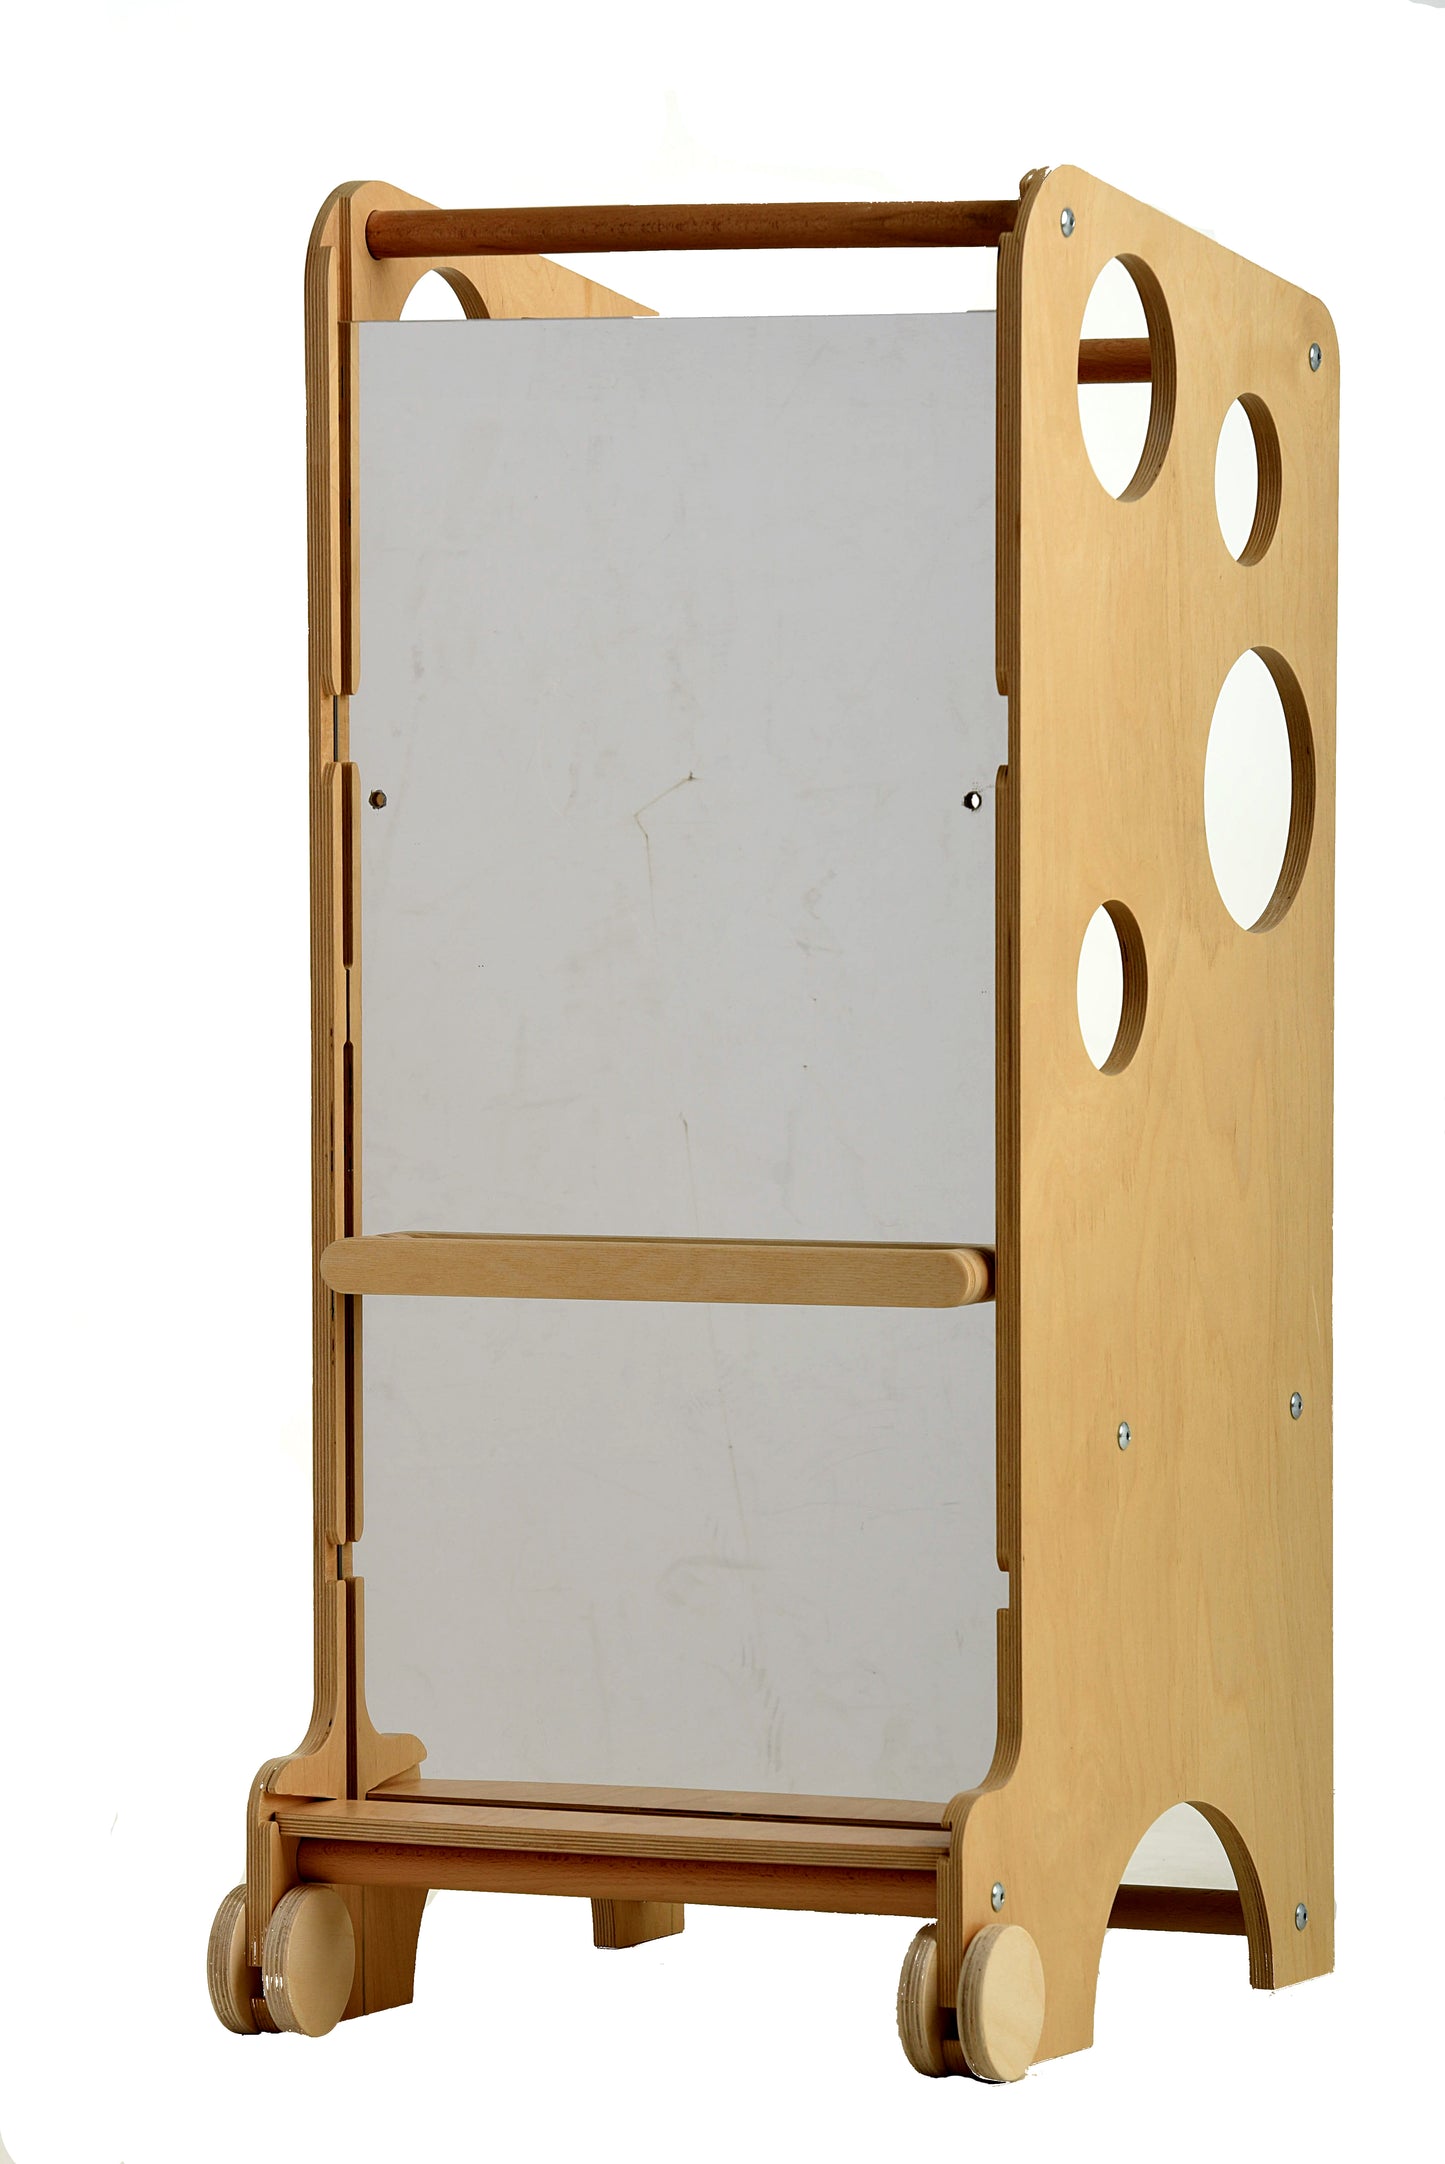 Montessori Mirror met pull-up bar XL - Leea's Tower Accessoire